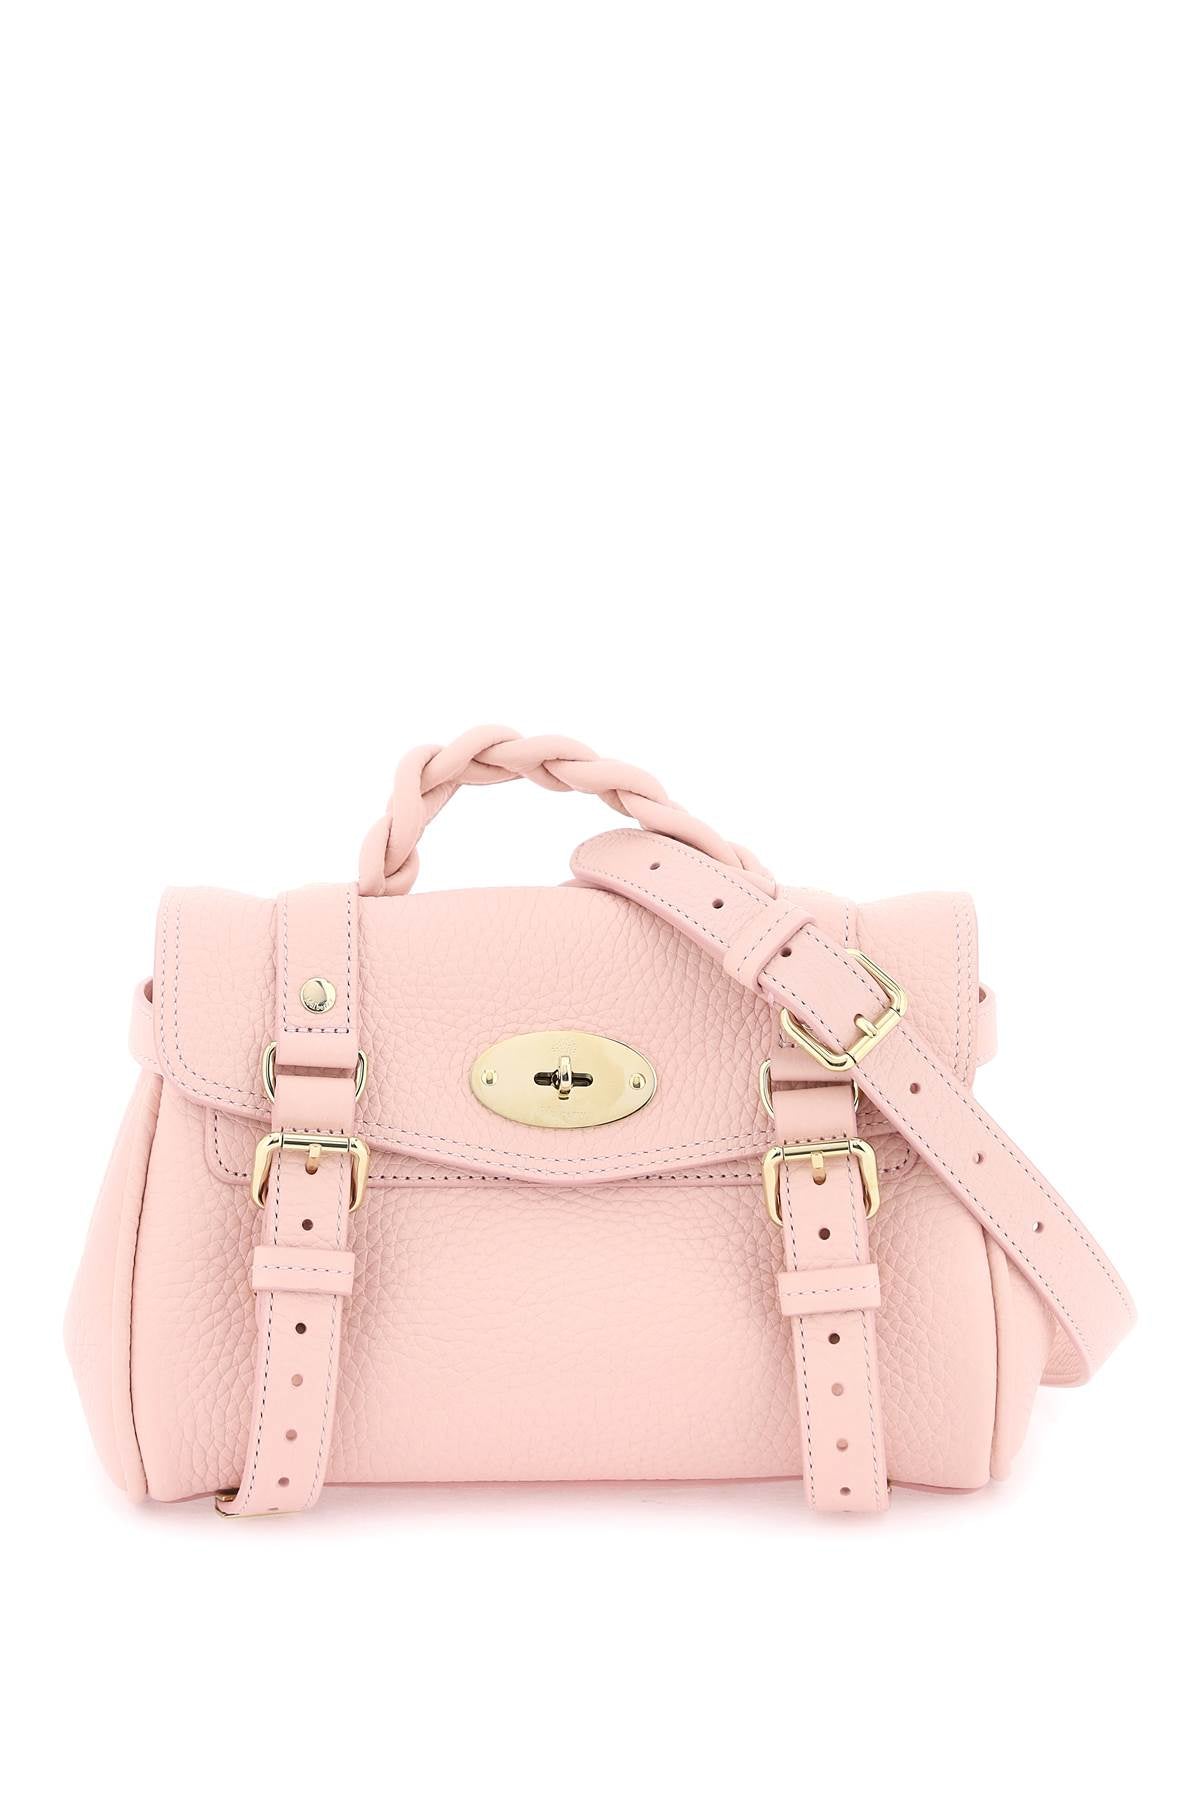 Mulberry Stylish Pink Mini Handbag For Women